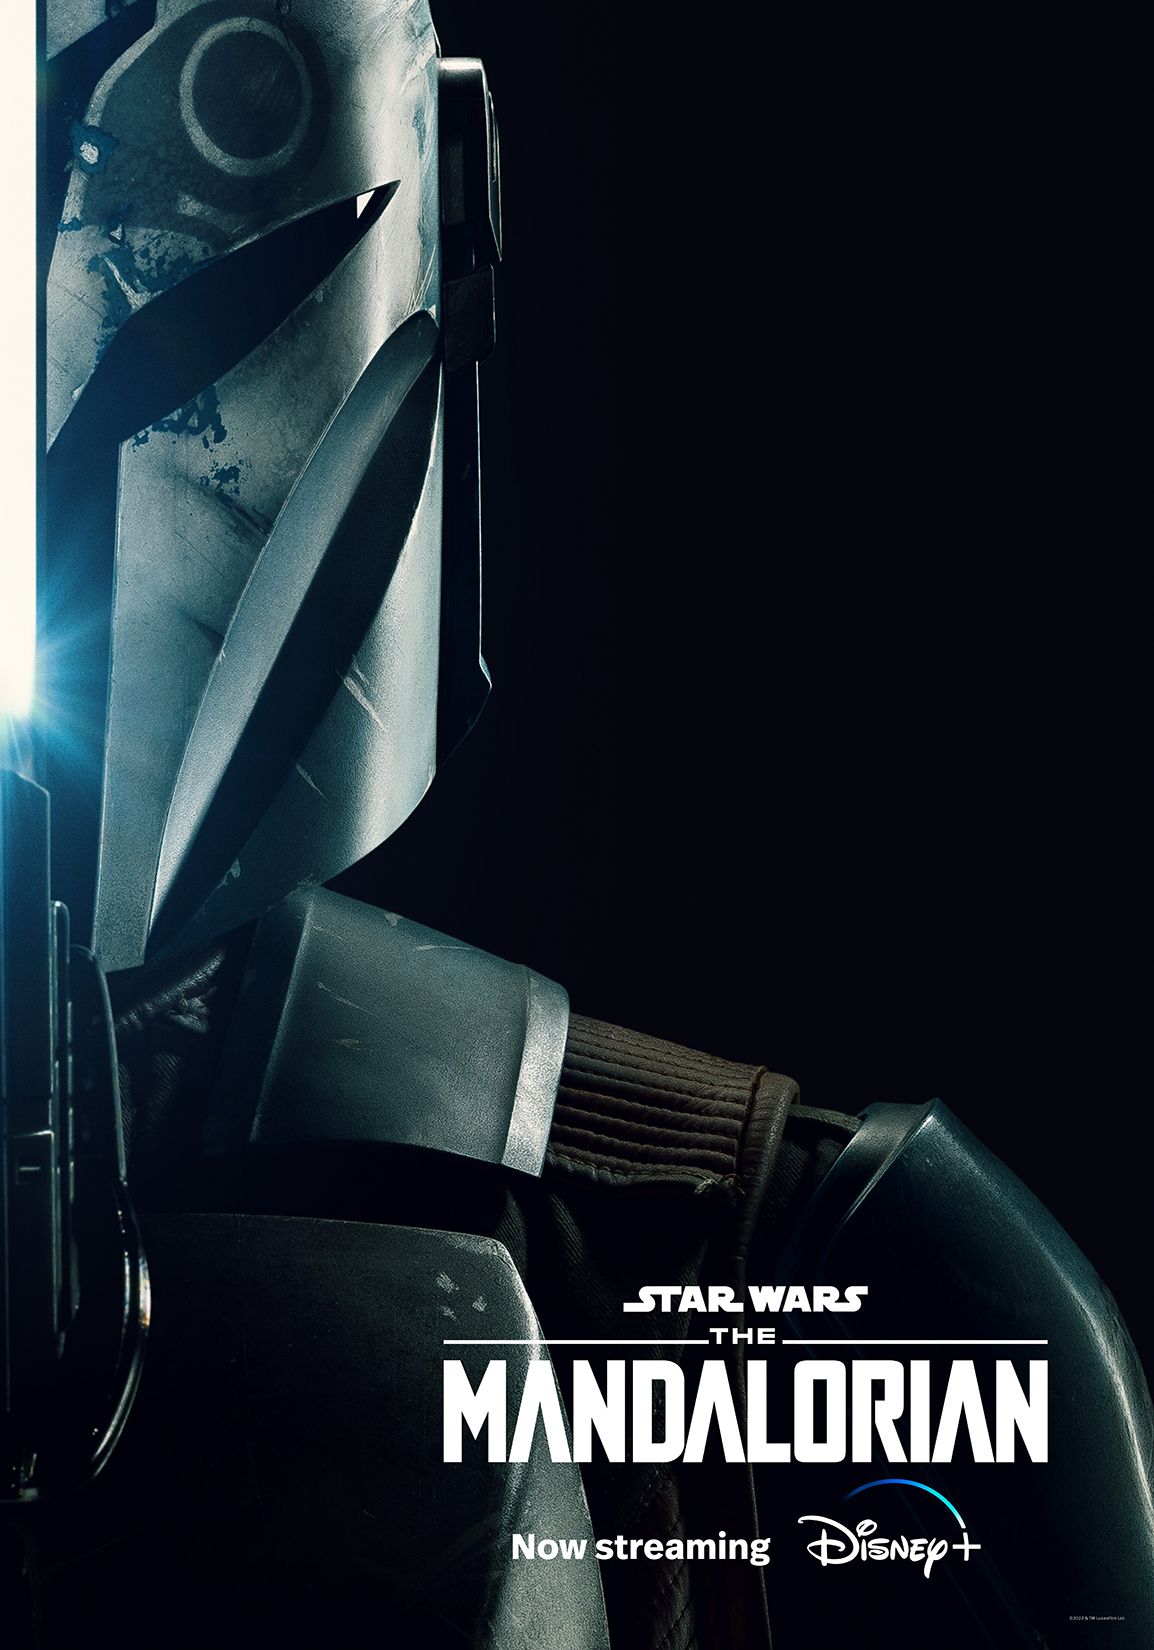 the-mandalorian-darksaber-poster-bo-katan